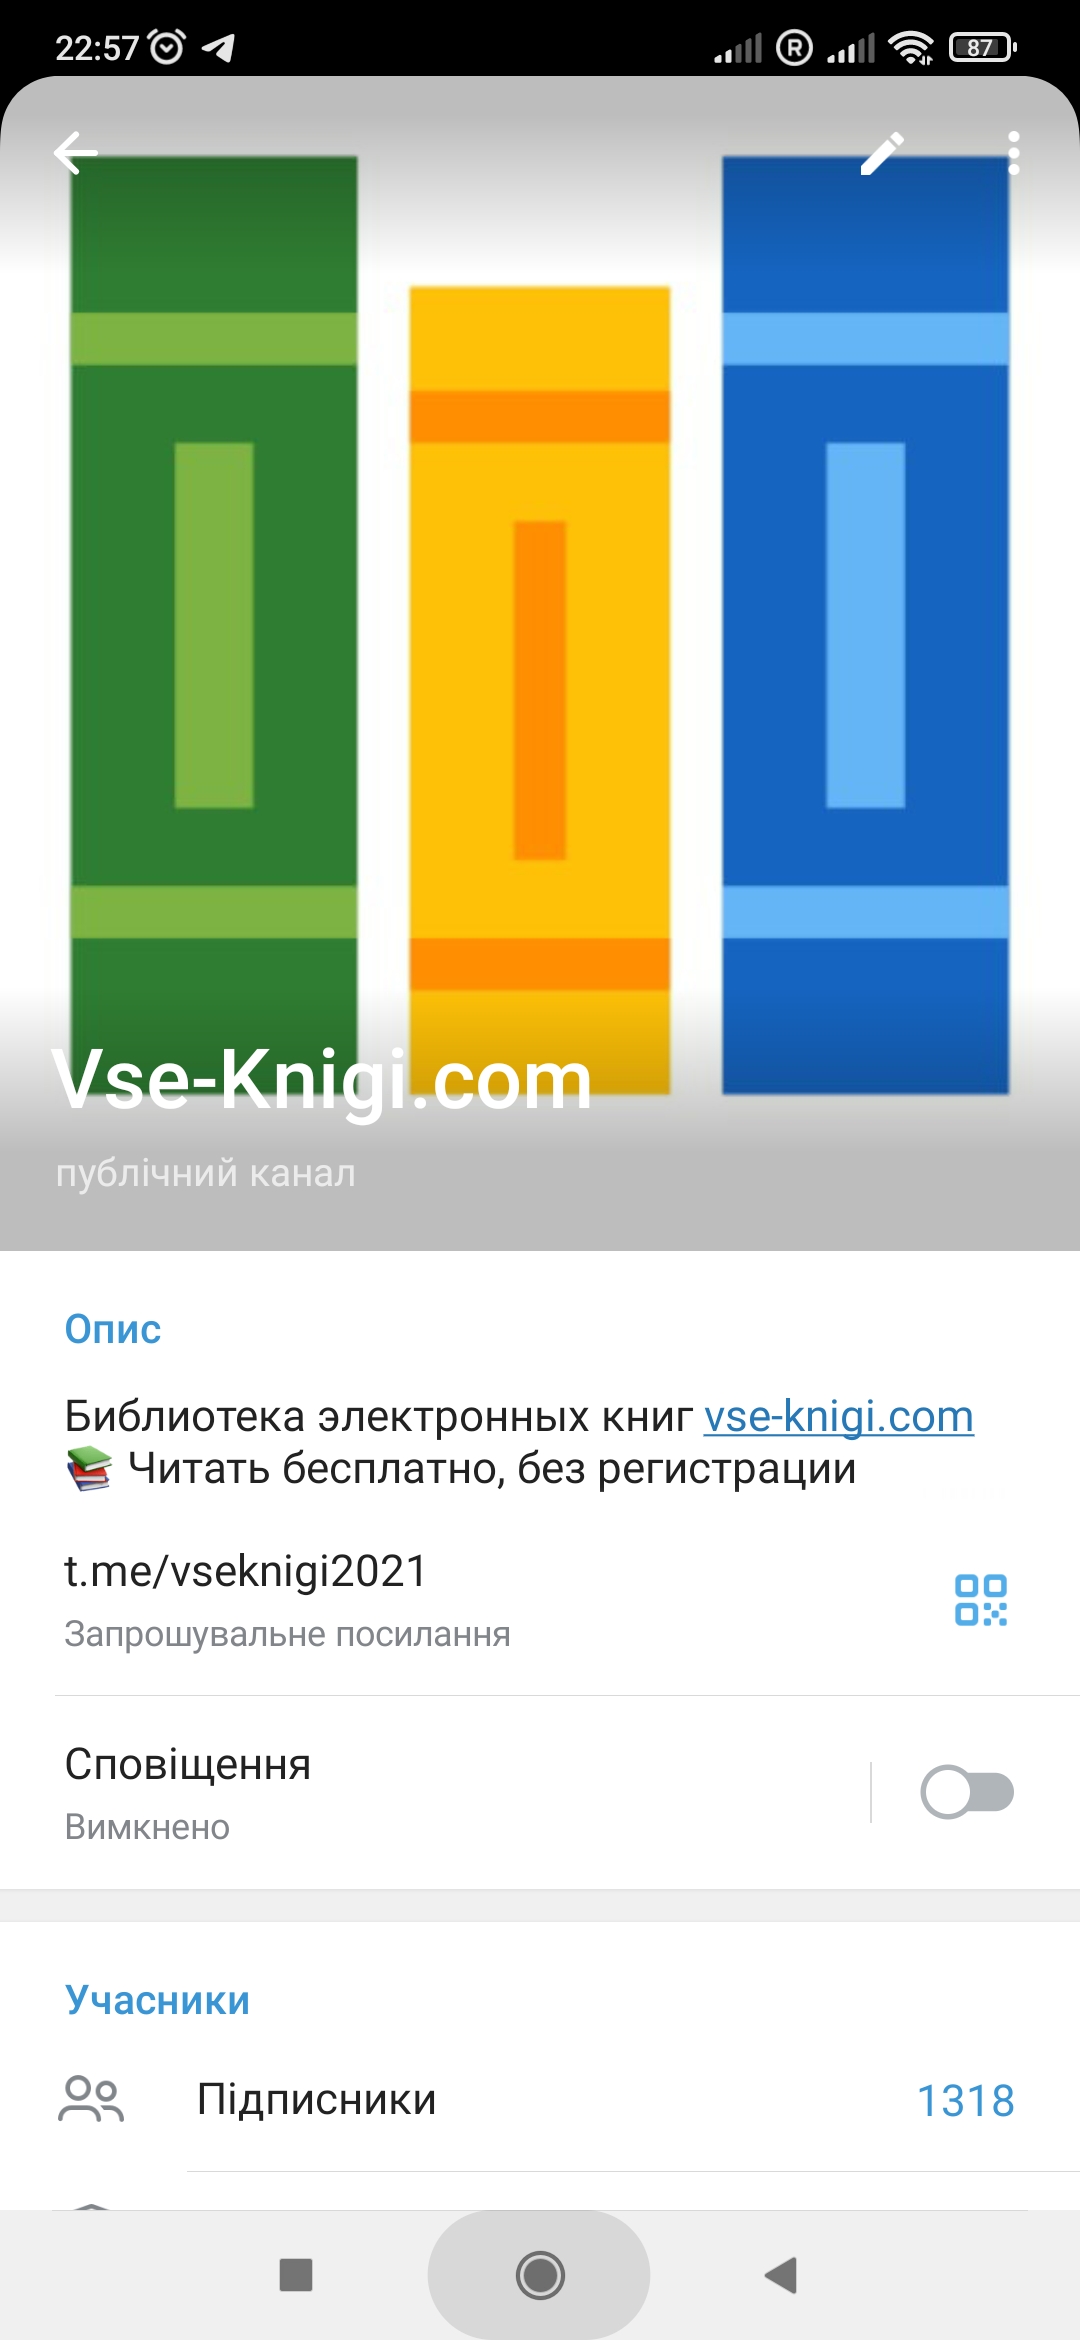 Телеграм популярных книг Vse-Knigi.com